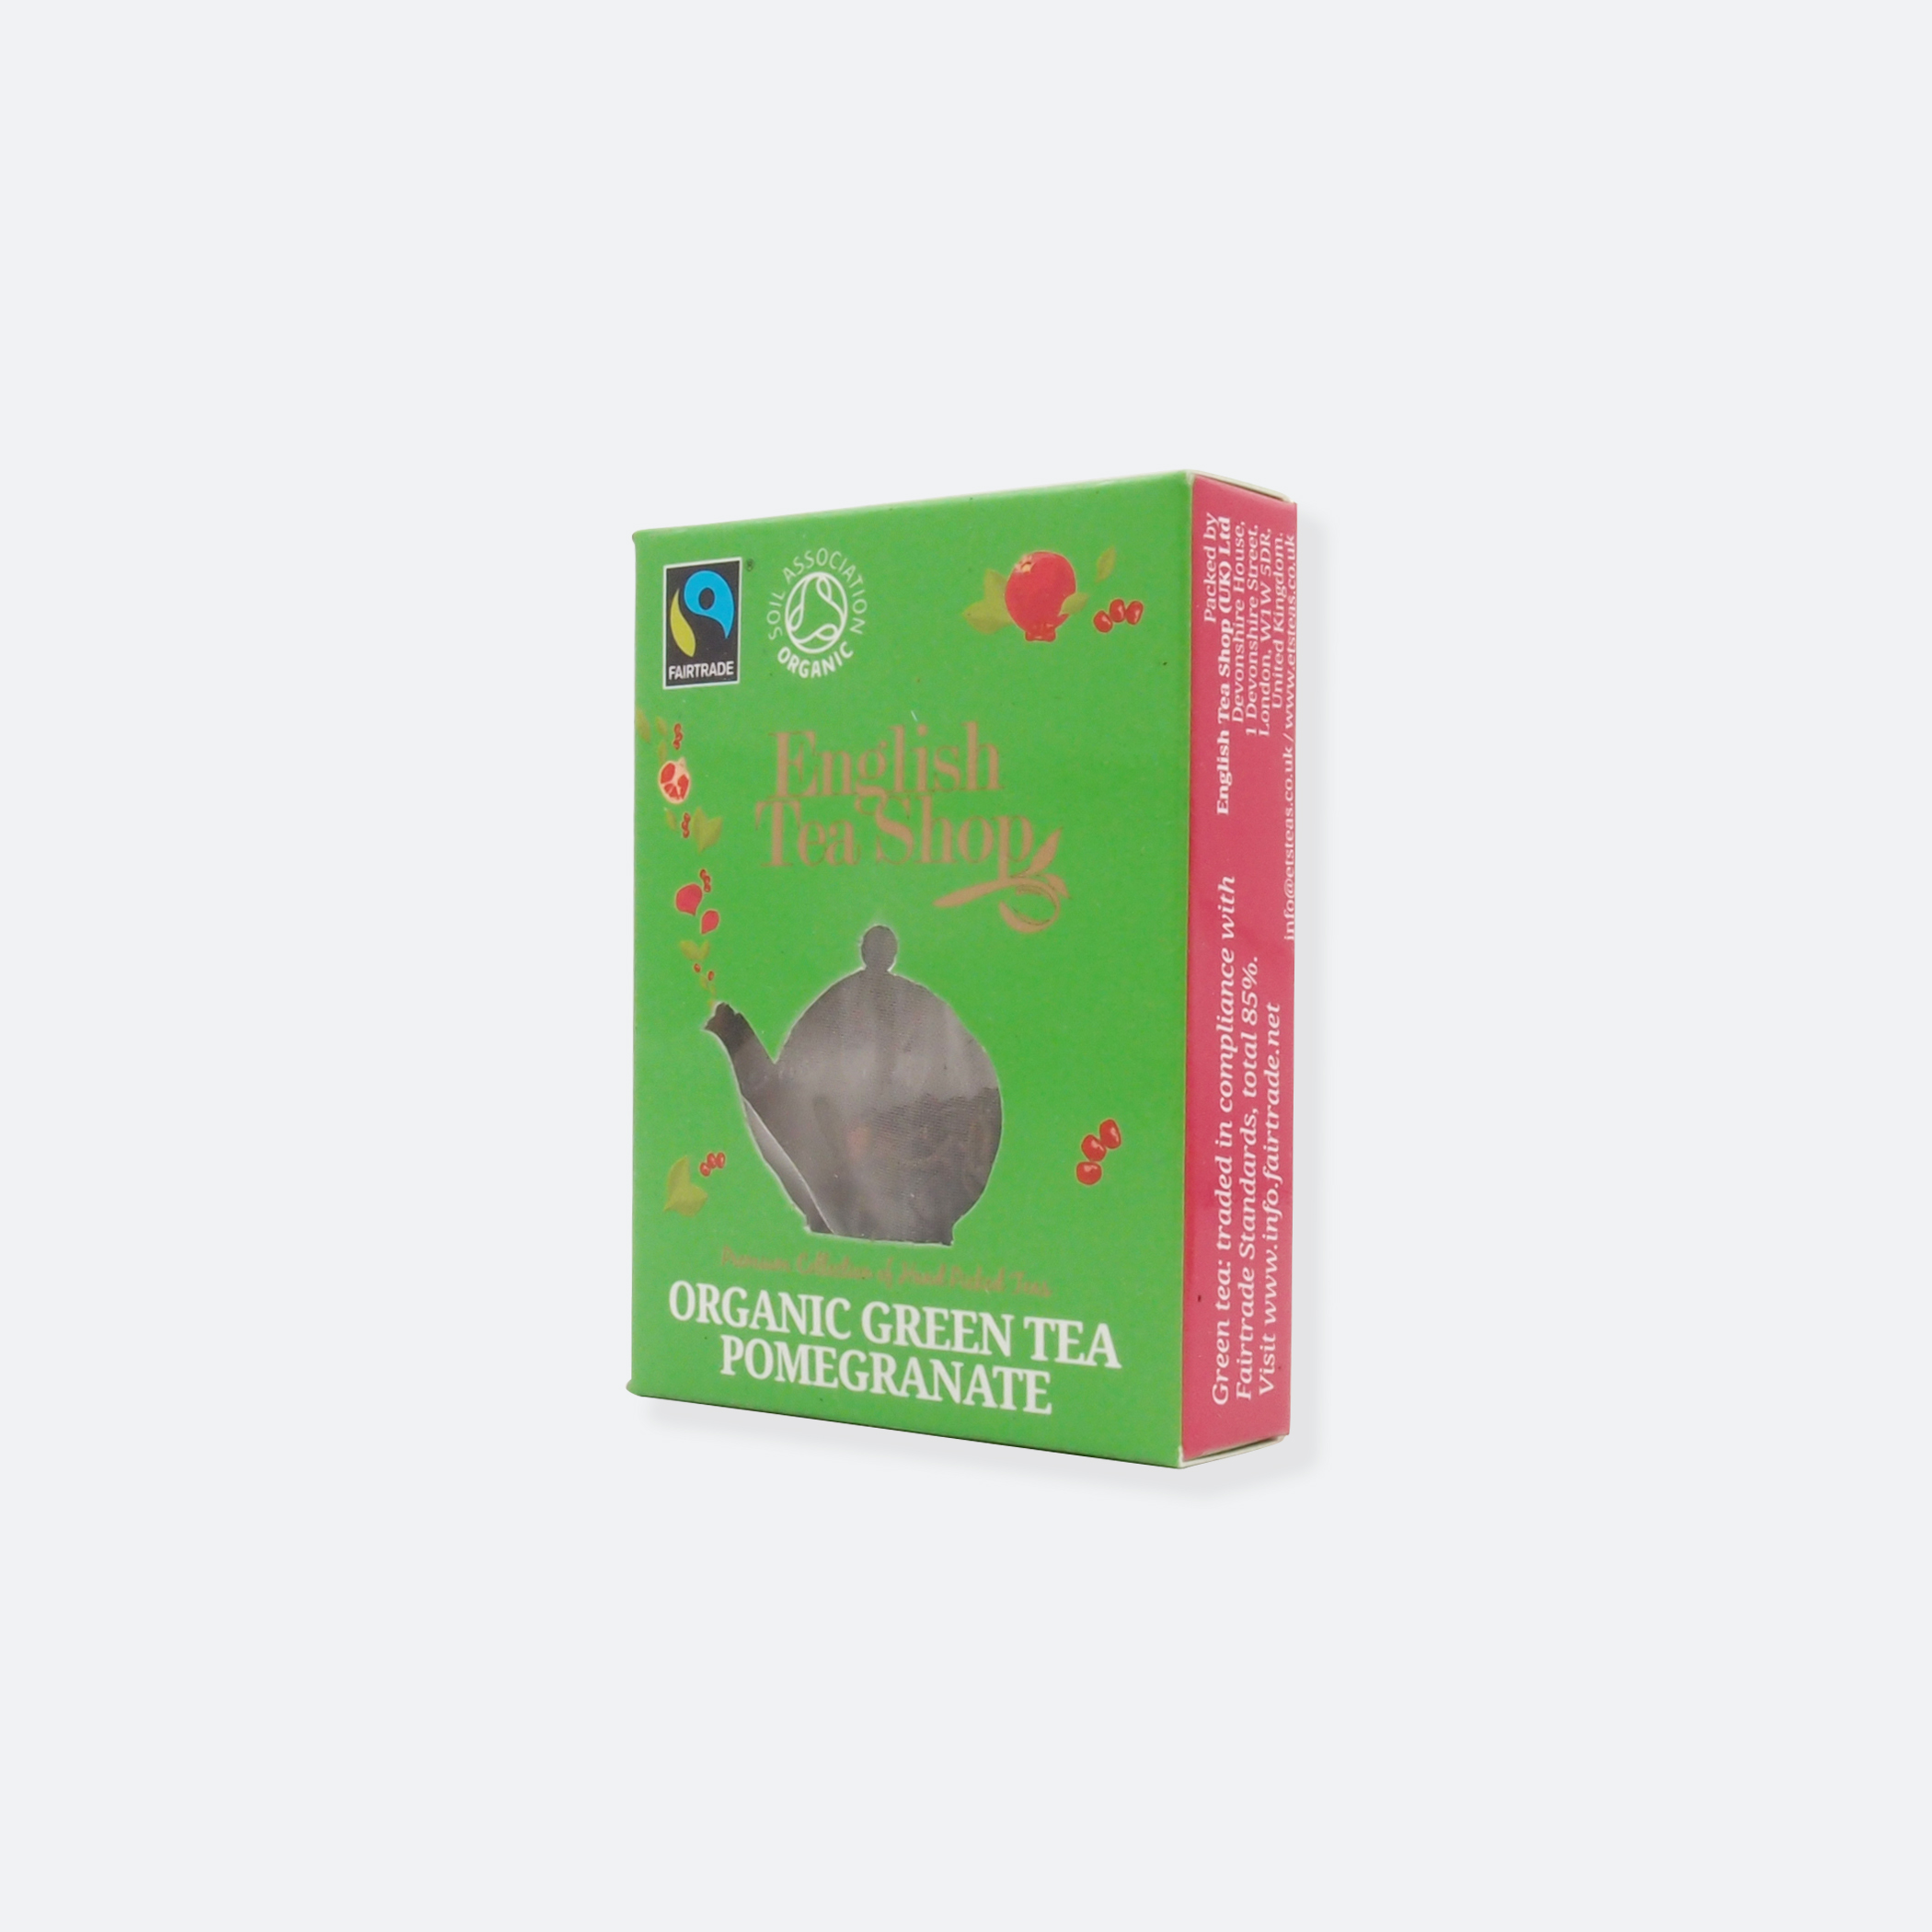 OhMart English Tea Shop - Organic Green Tea Pomegranate 3